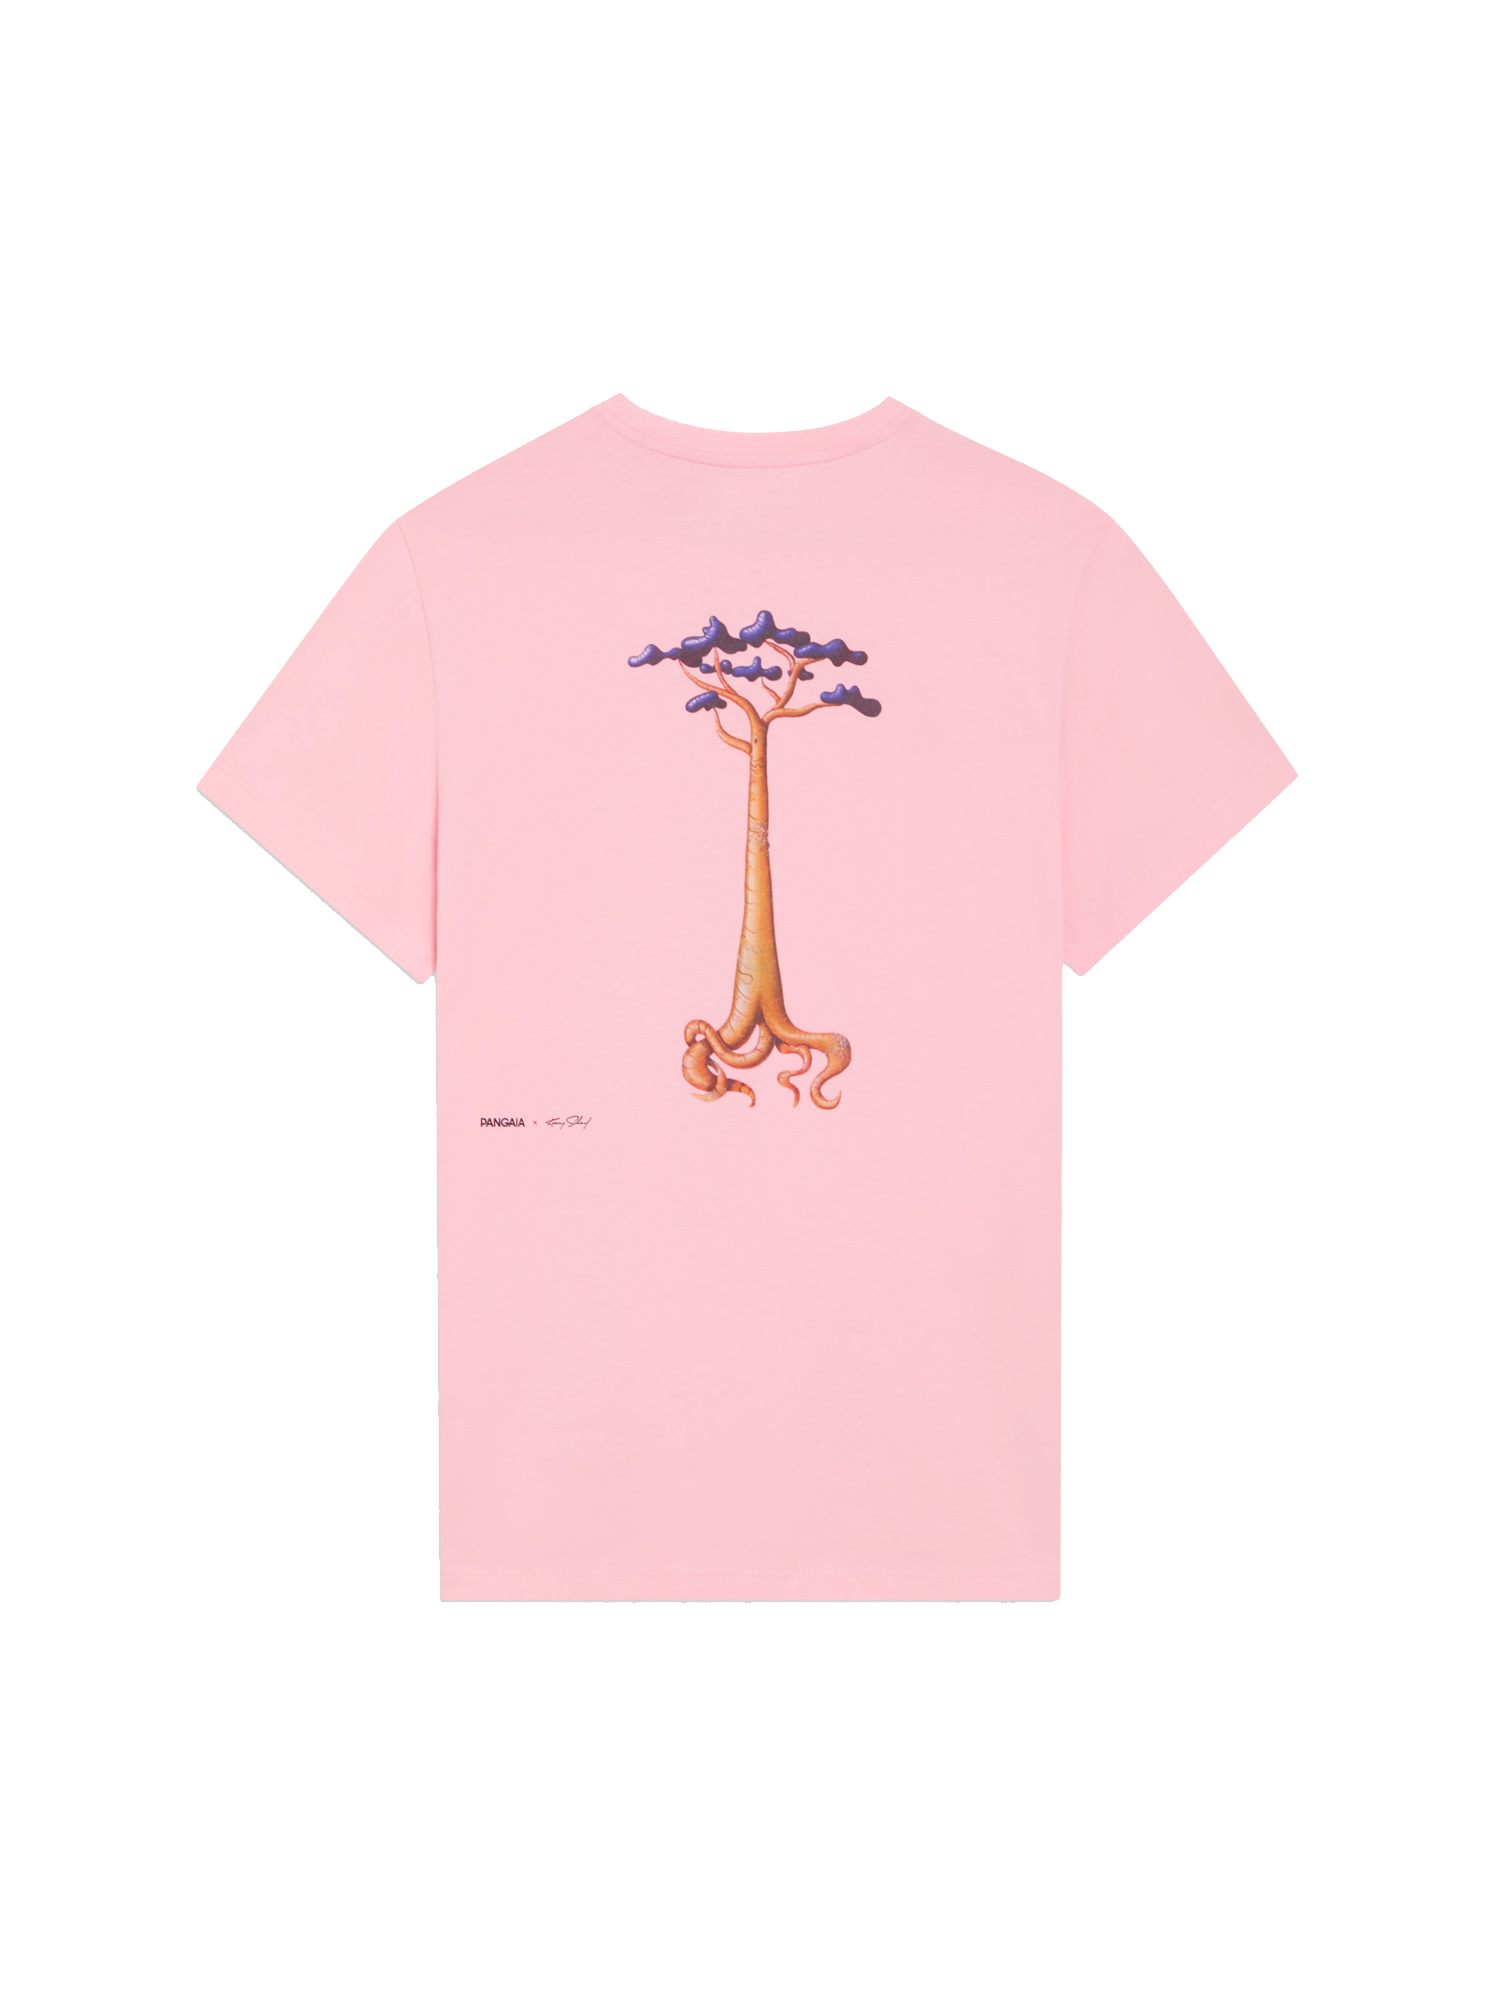 PANGAIA x Kenny Scharf Organic Cotton T-shirt - Swamp Style—sakura pink-packshot-3